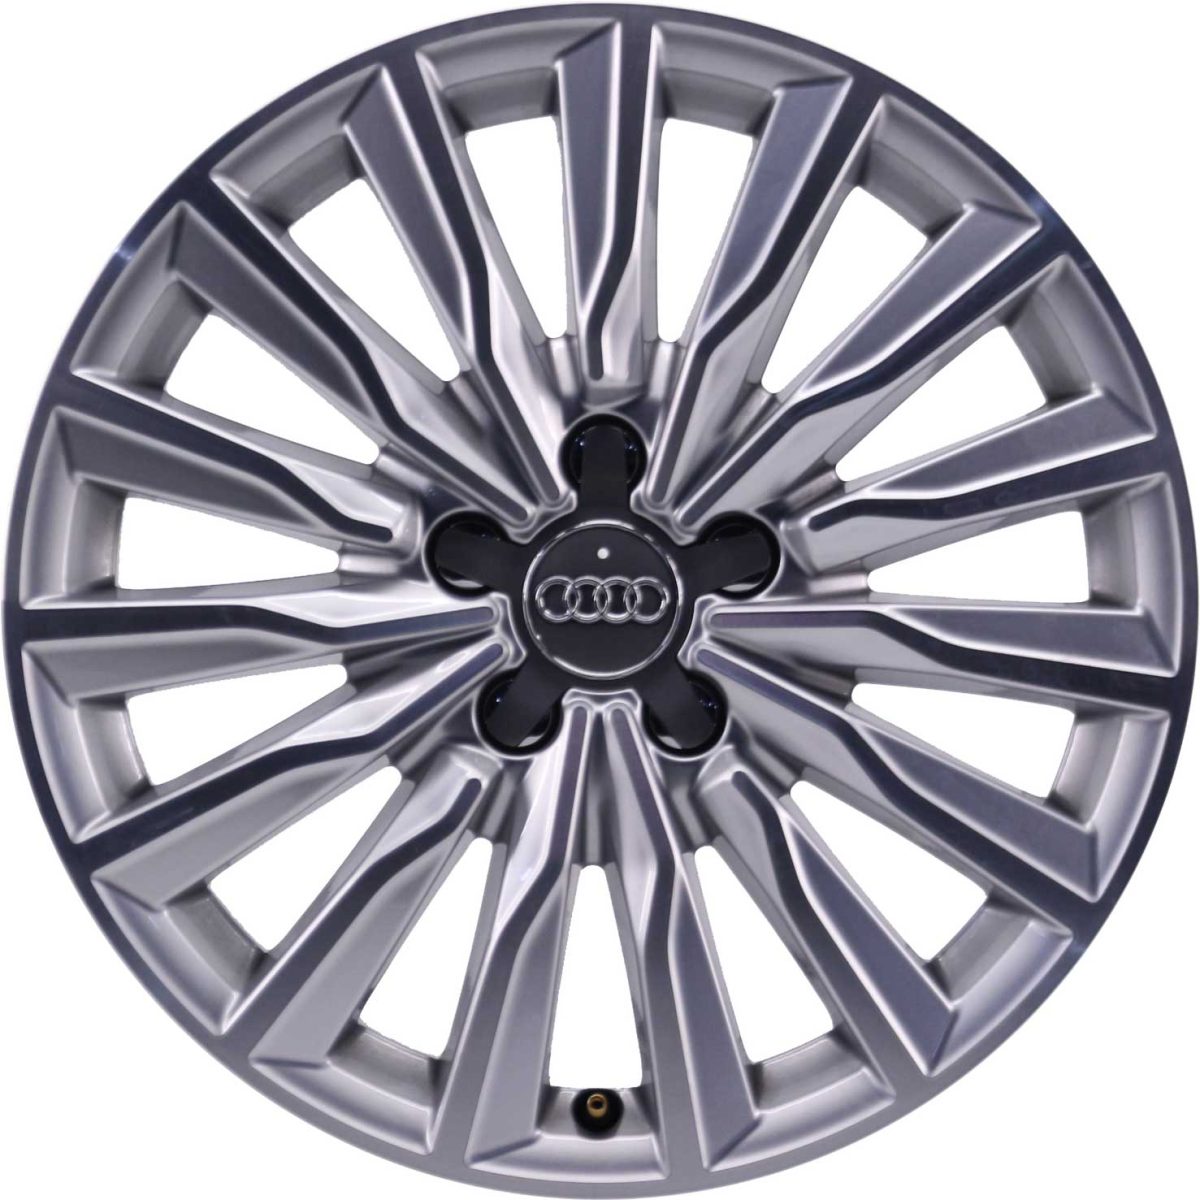 Genuine Audi A3 S3 8V 15 Spoke 18" Inch Alloy Wheels with Silver & Diamond Turned Finish 8V0 601 025 CD